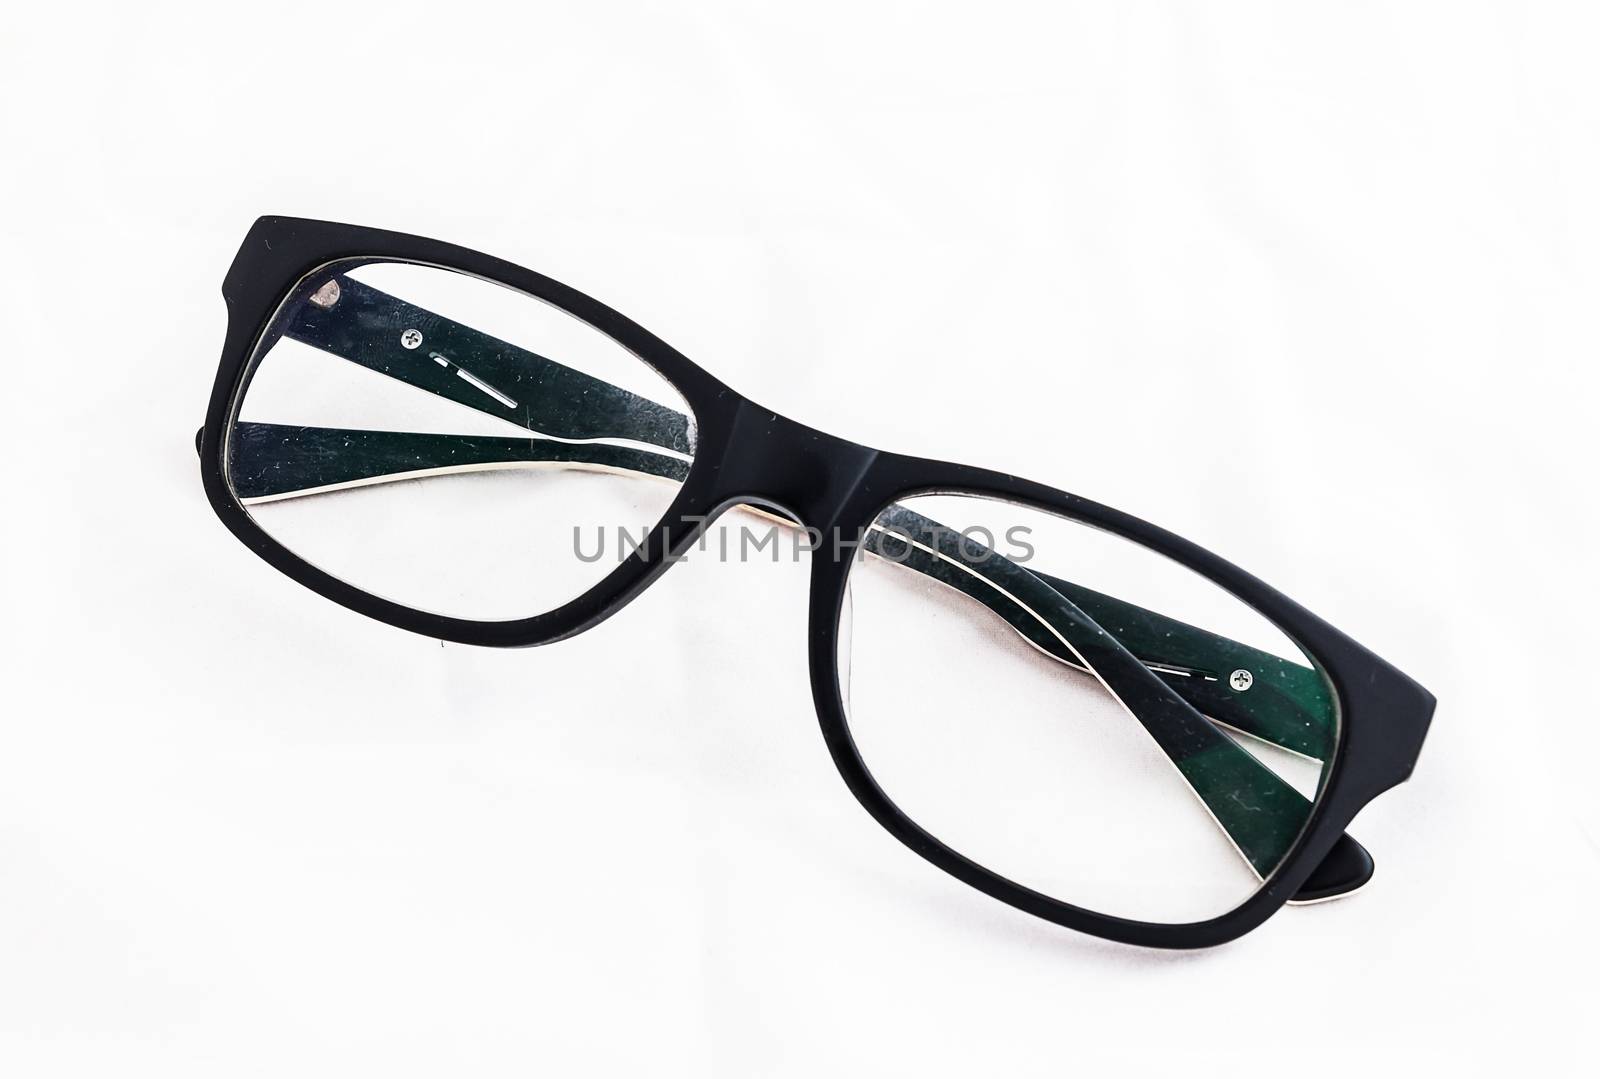 Old eyeglasses by hadkhanong